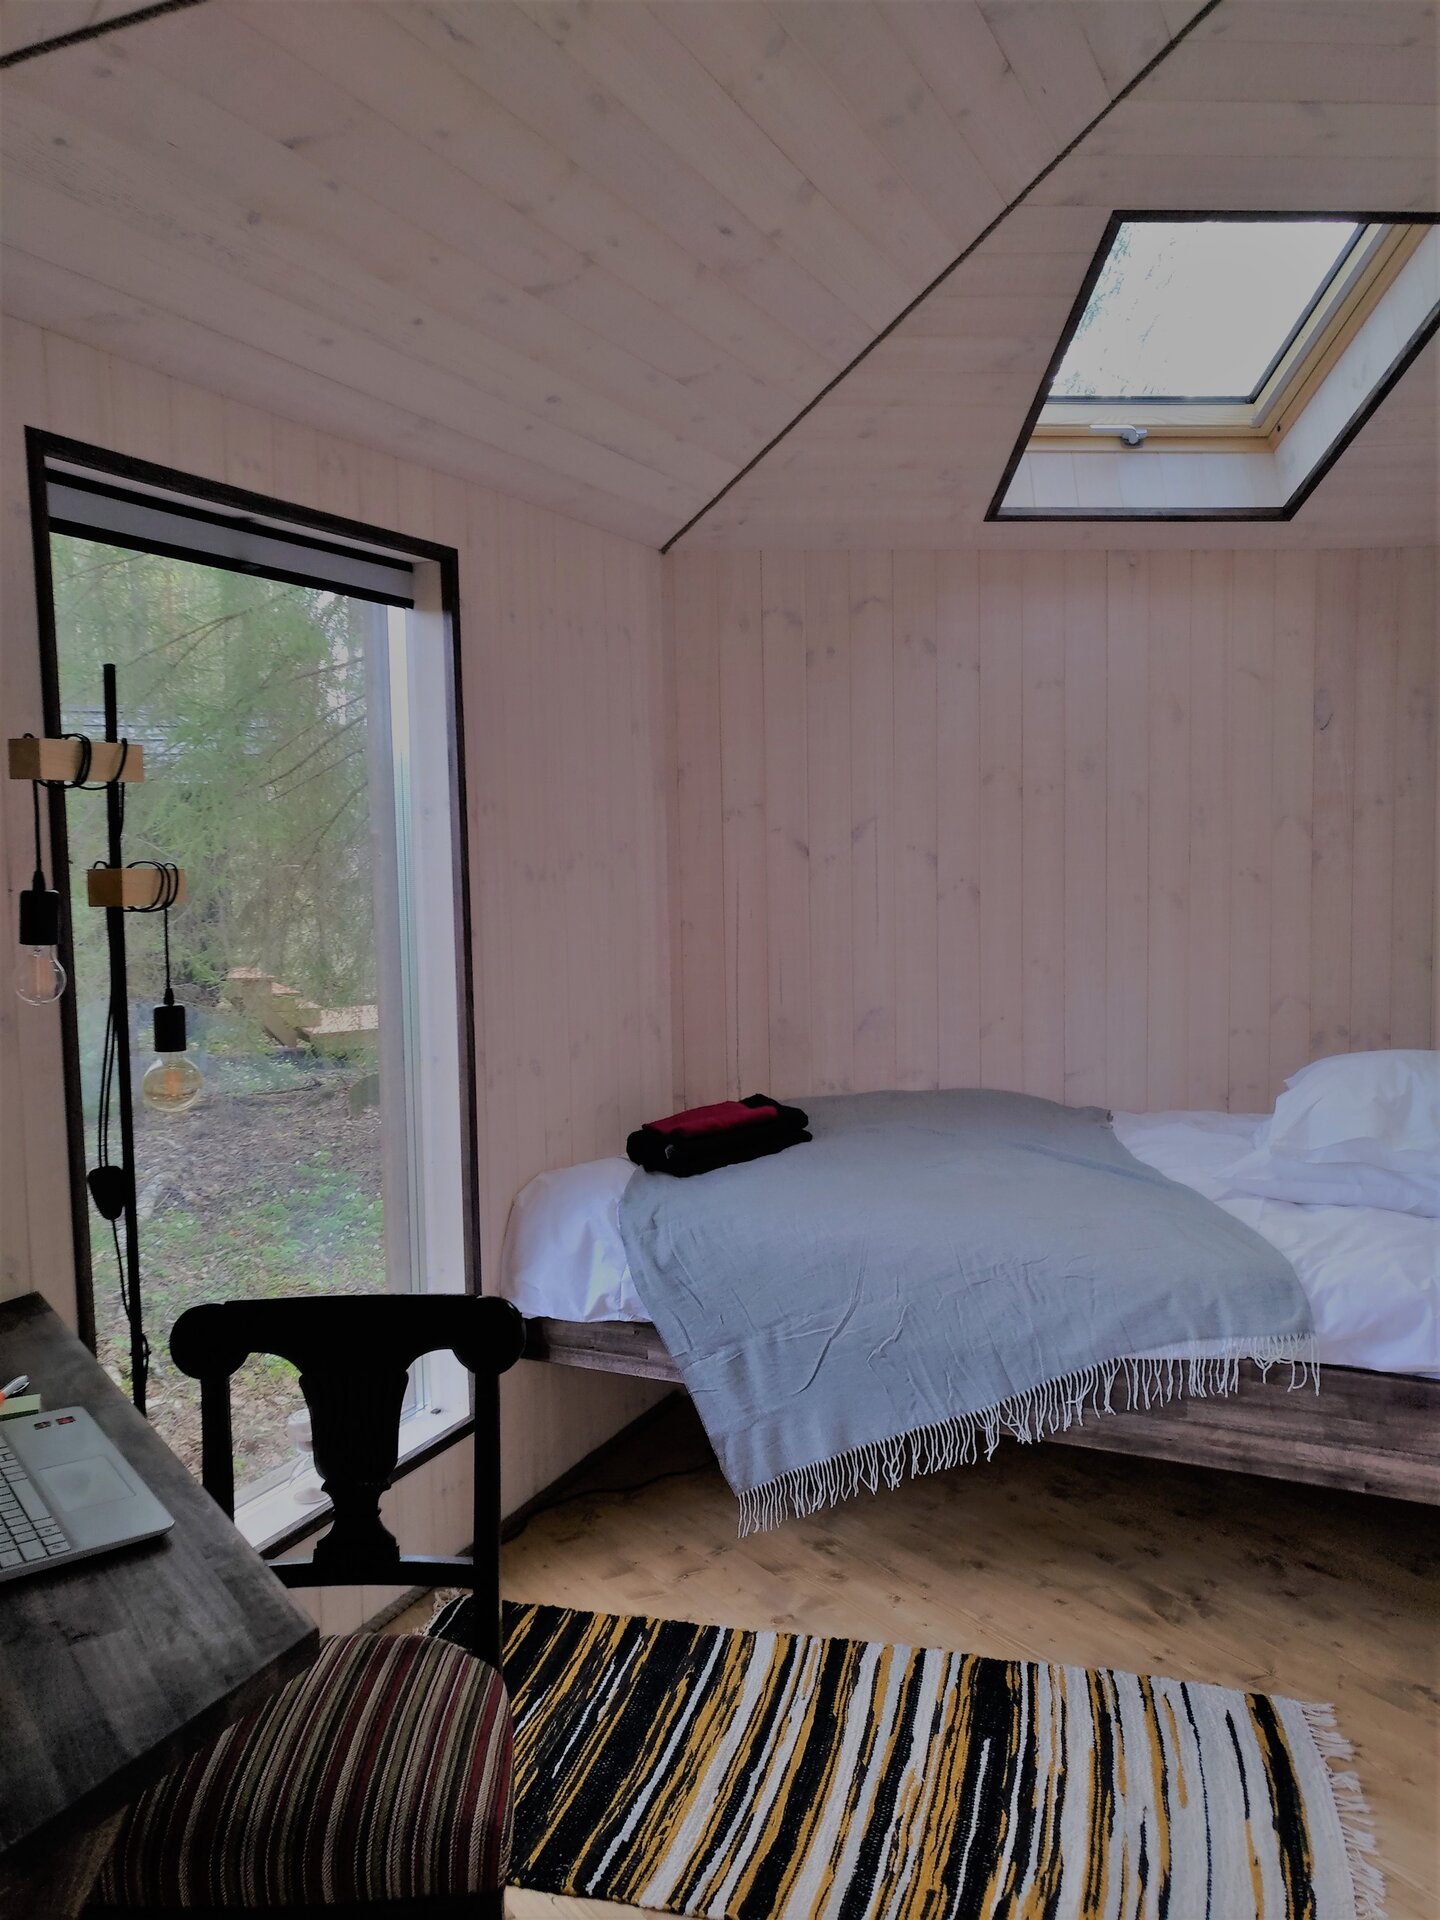 Mini-house - interior view